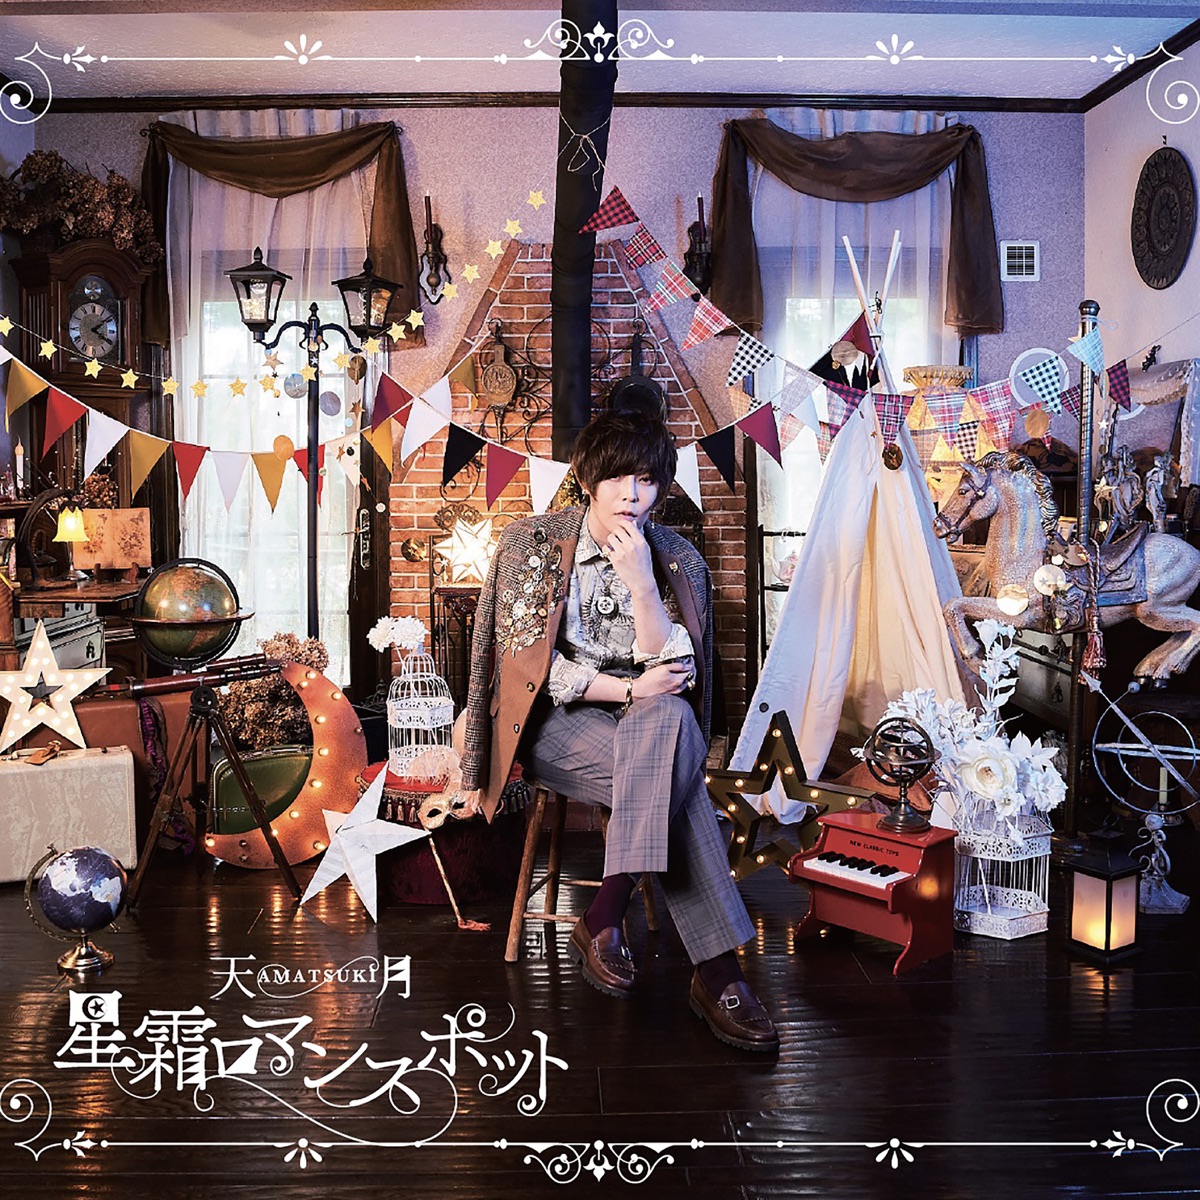 Cover art for『Amatsuki - Loser's revenge』from the release『Seisou Roman Spot』